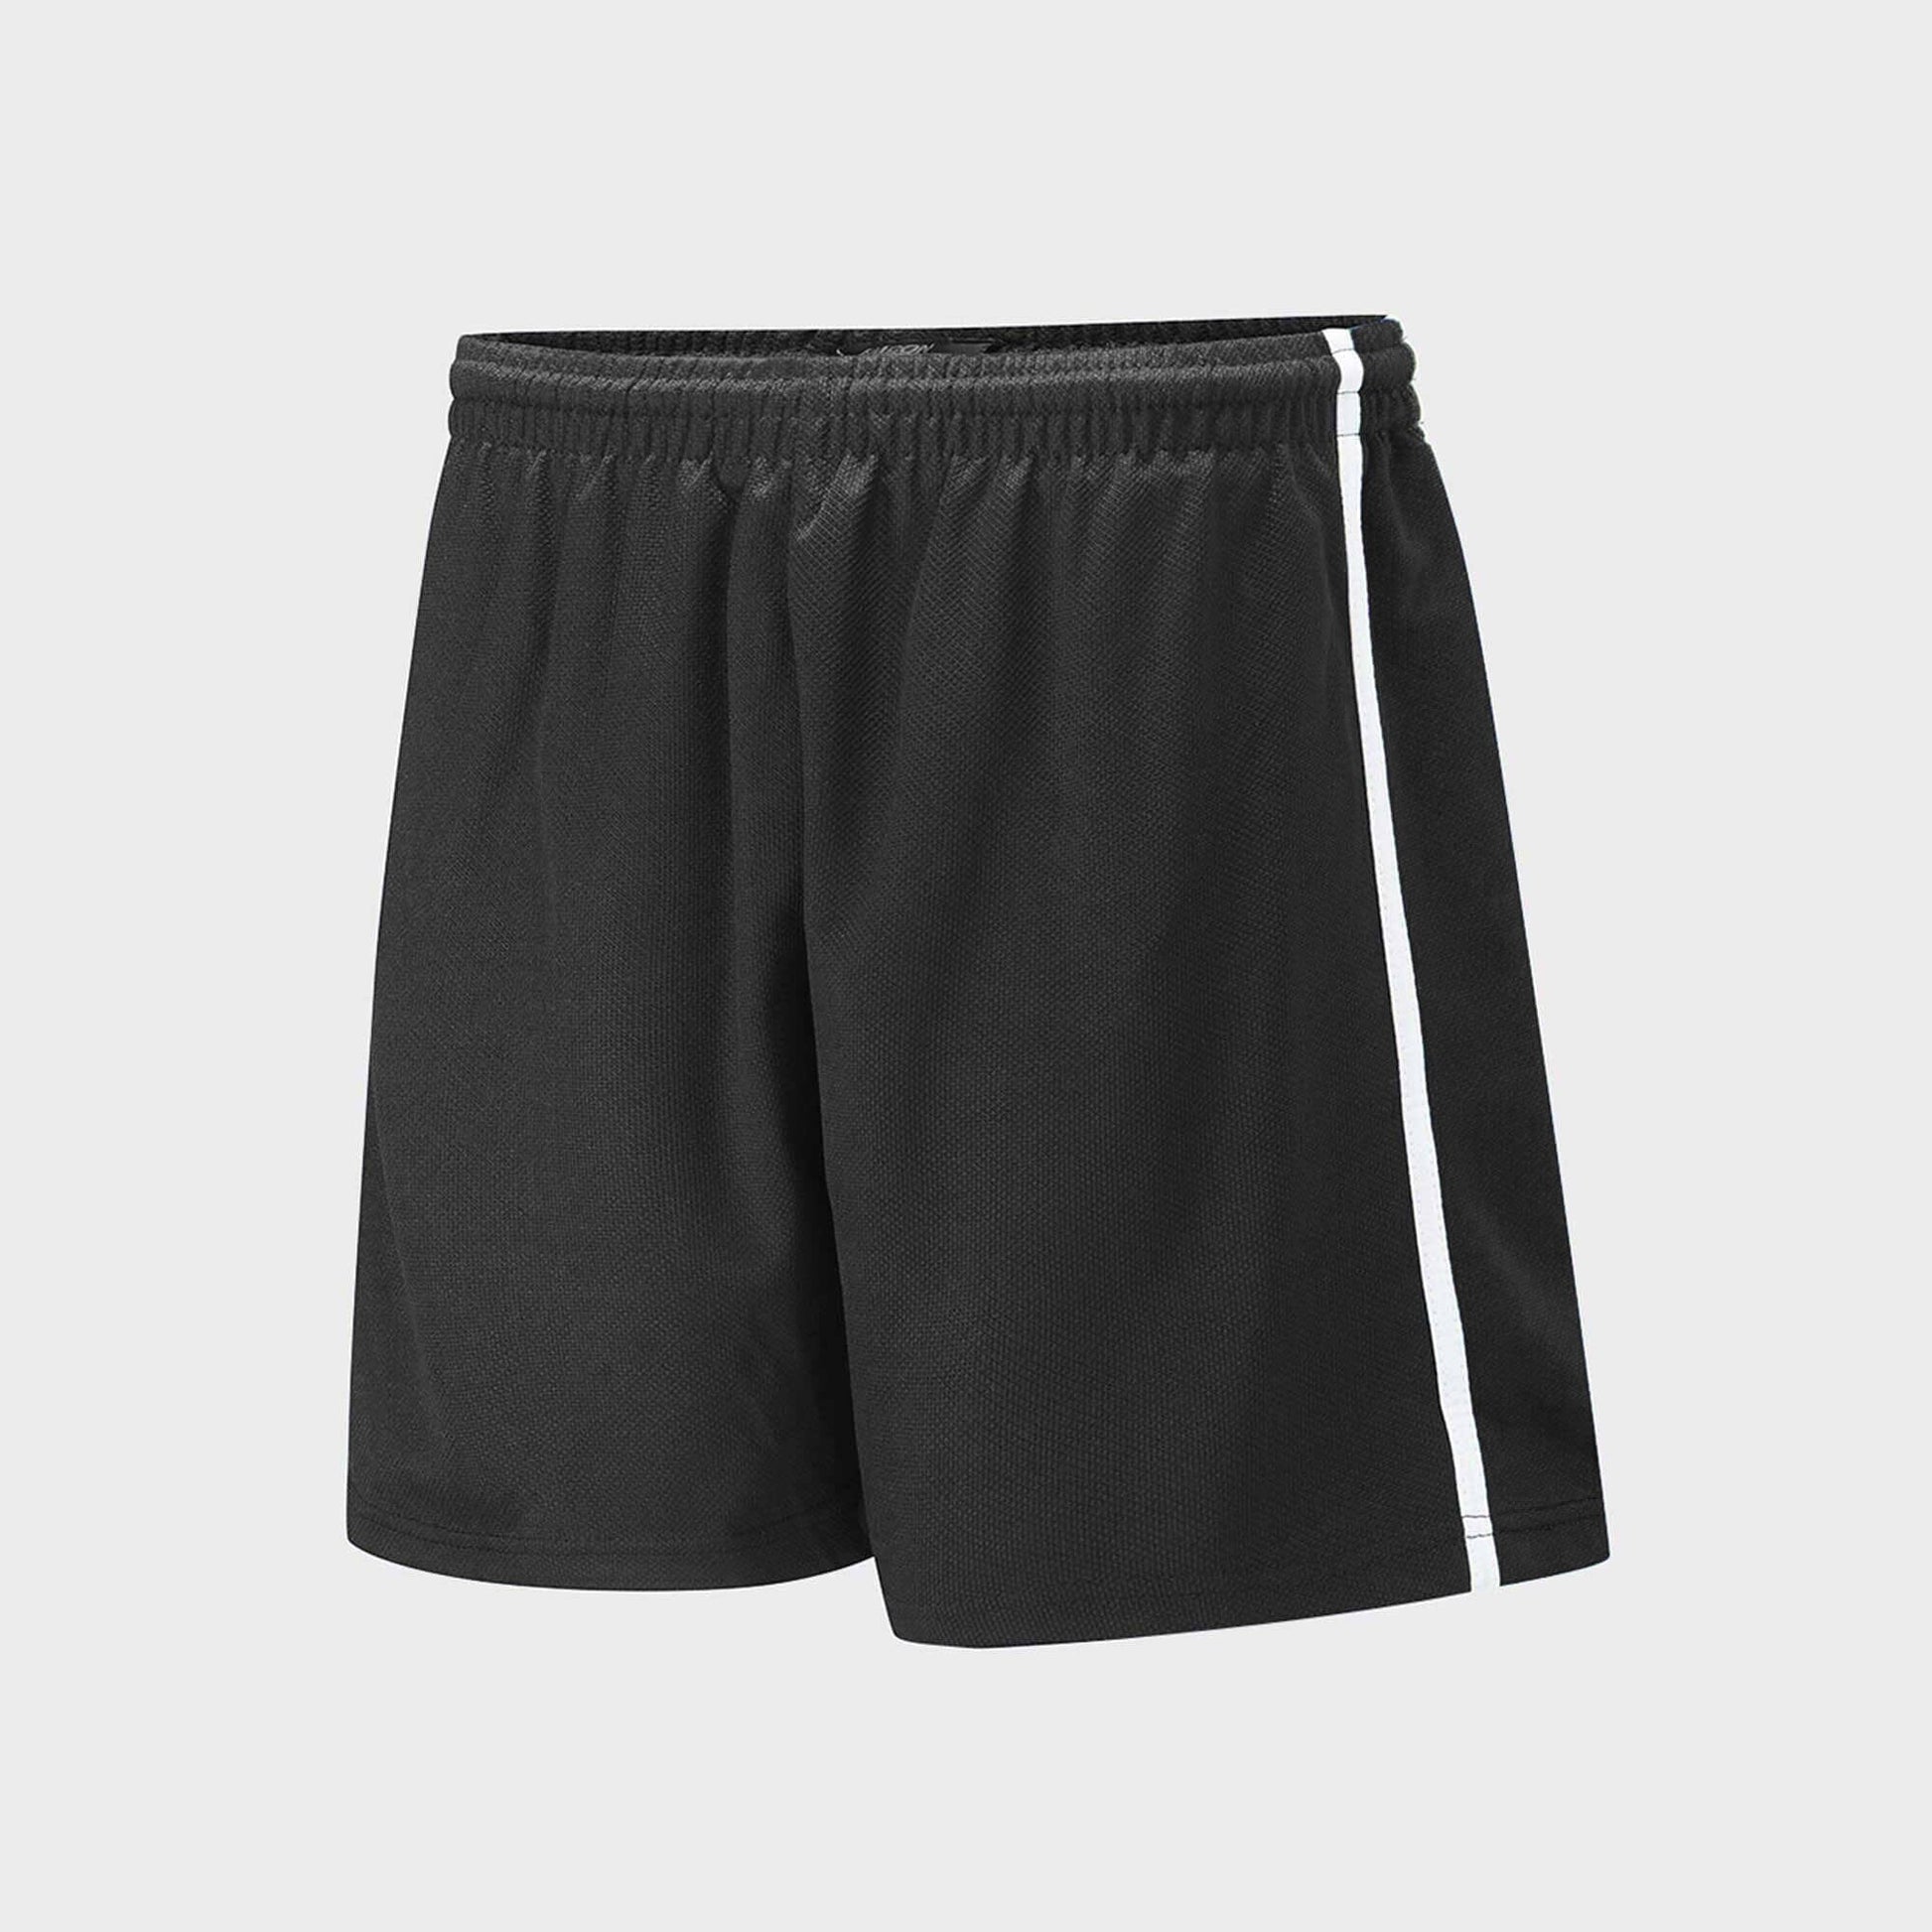 Falcon Men's Contrast panel Shorts Men's Shorts HAS Apparel Black & Black 3XS 